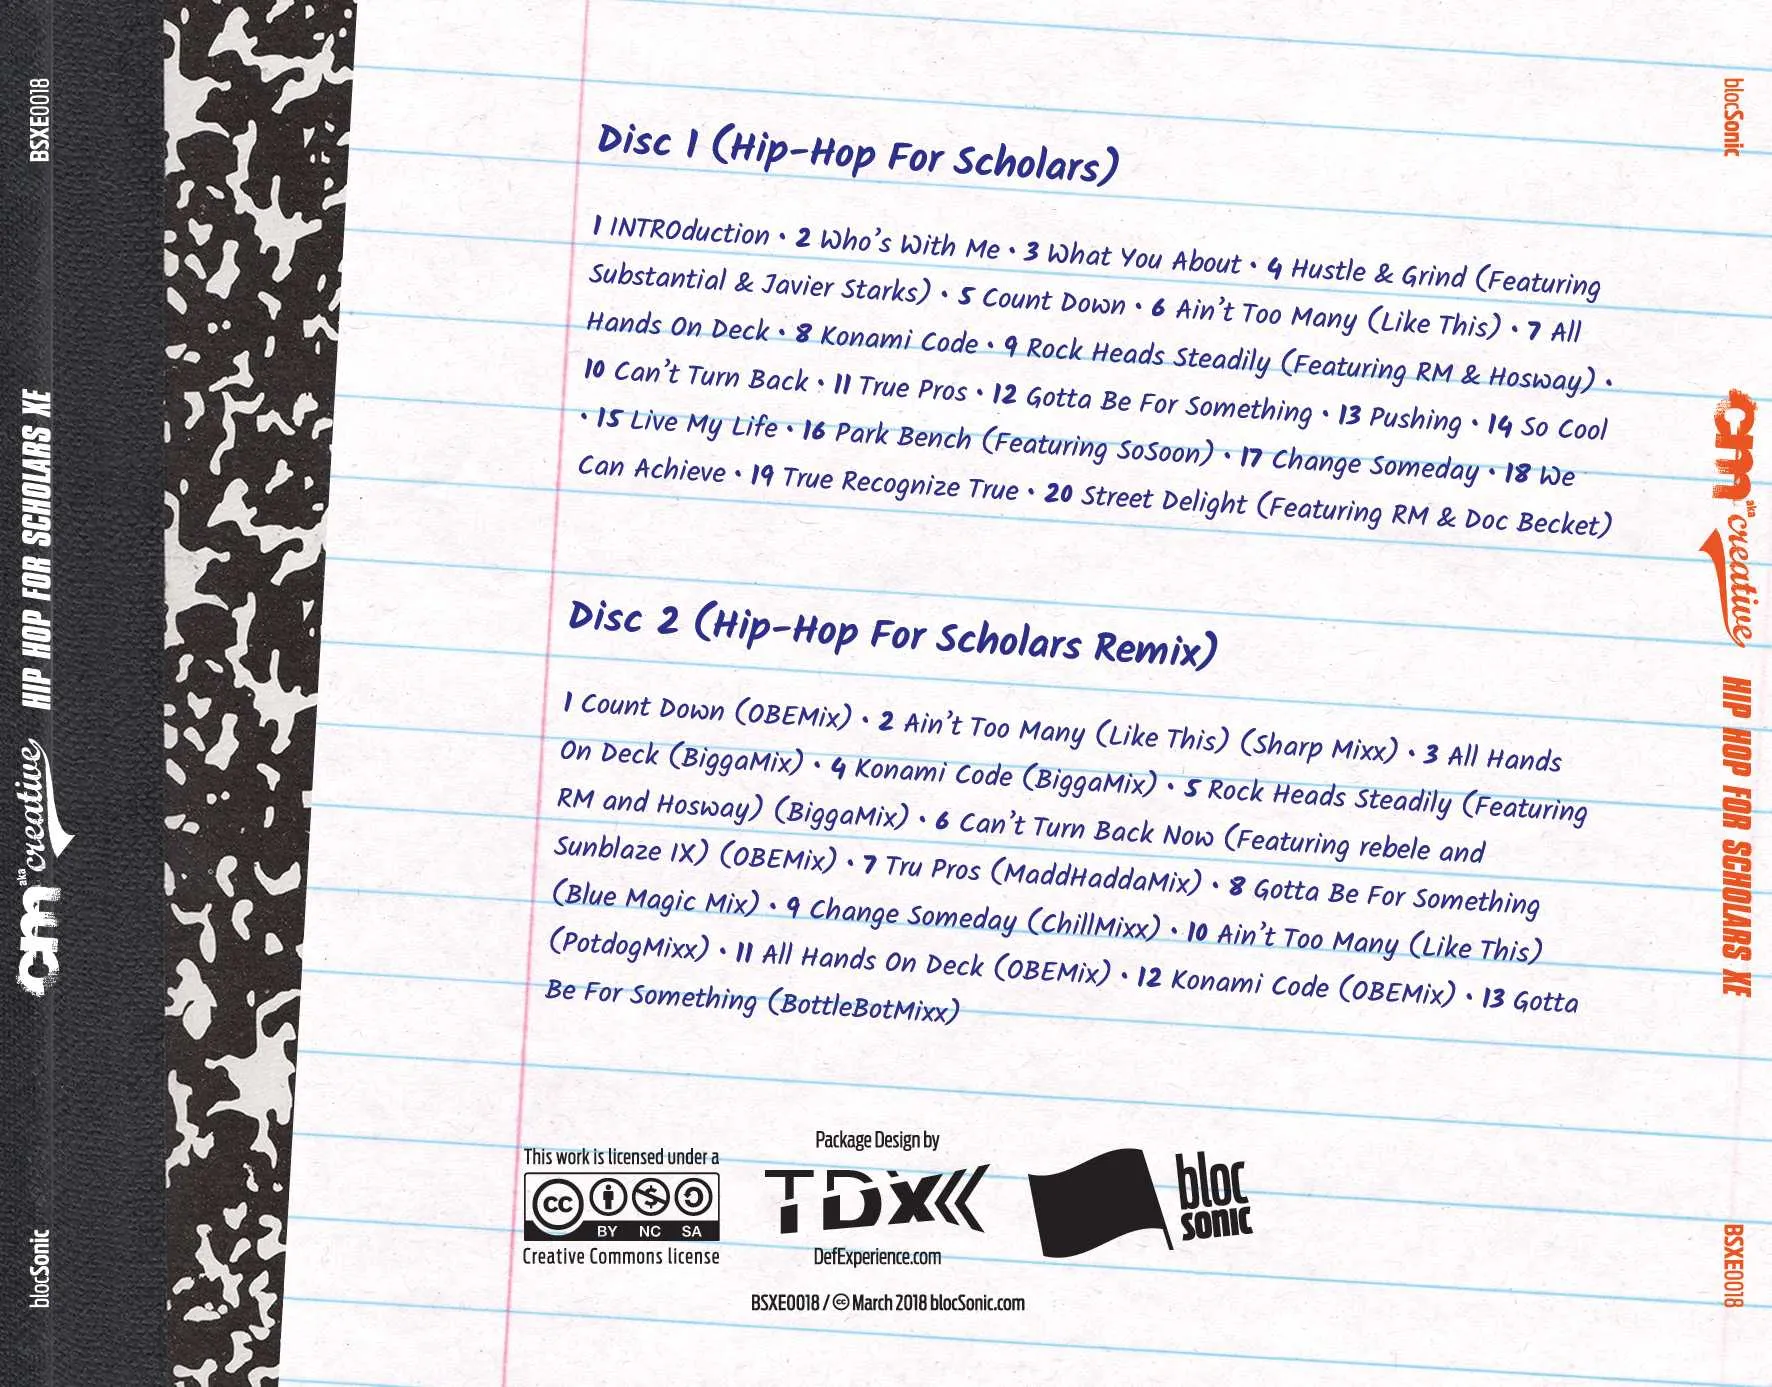 Album traycard for “Hip-Hop For Scholars XE” by CM aka Creative